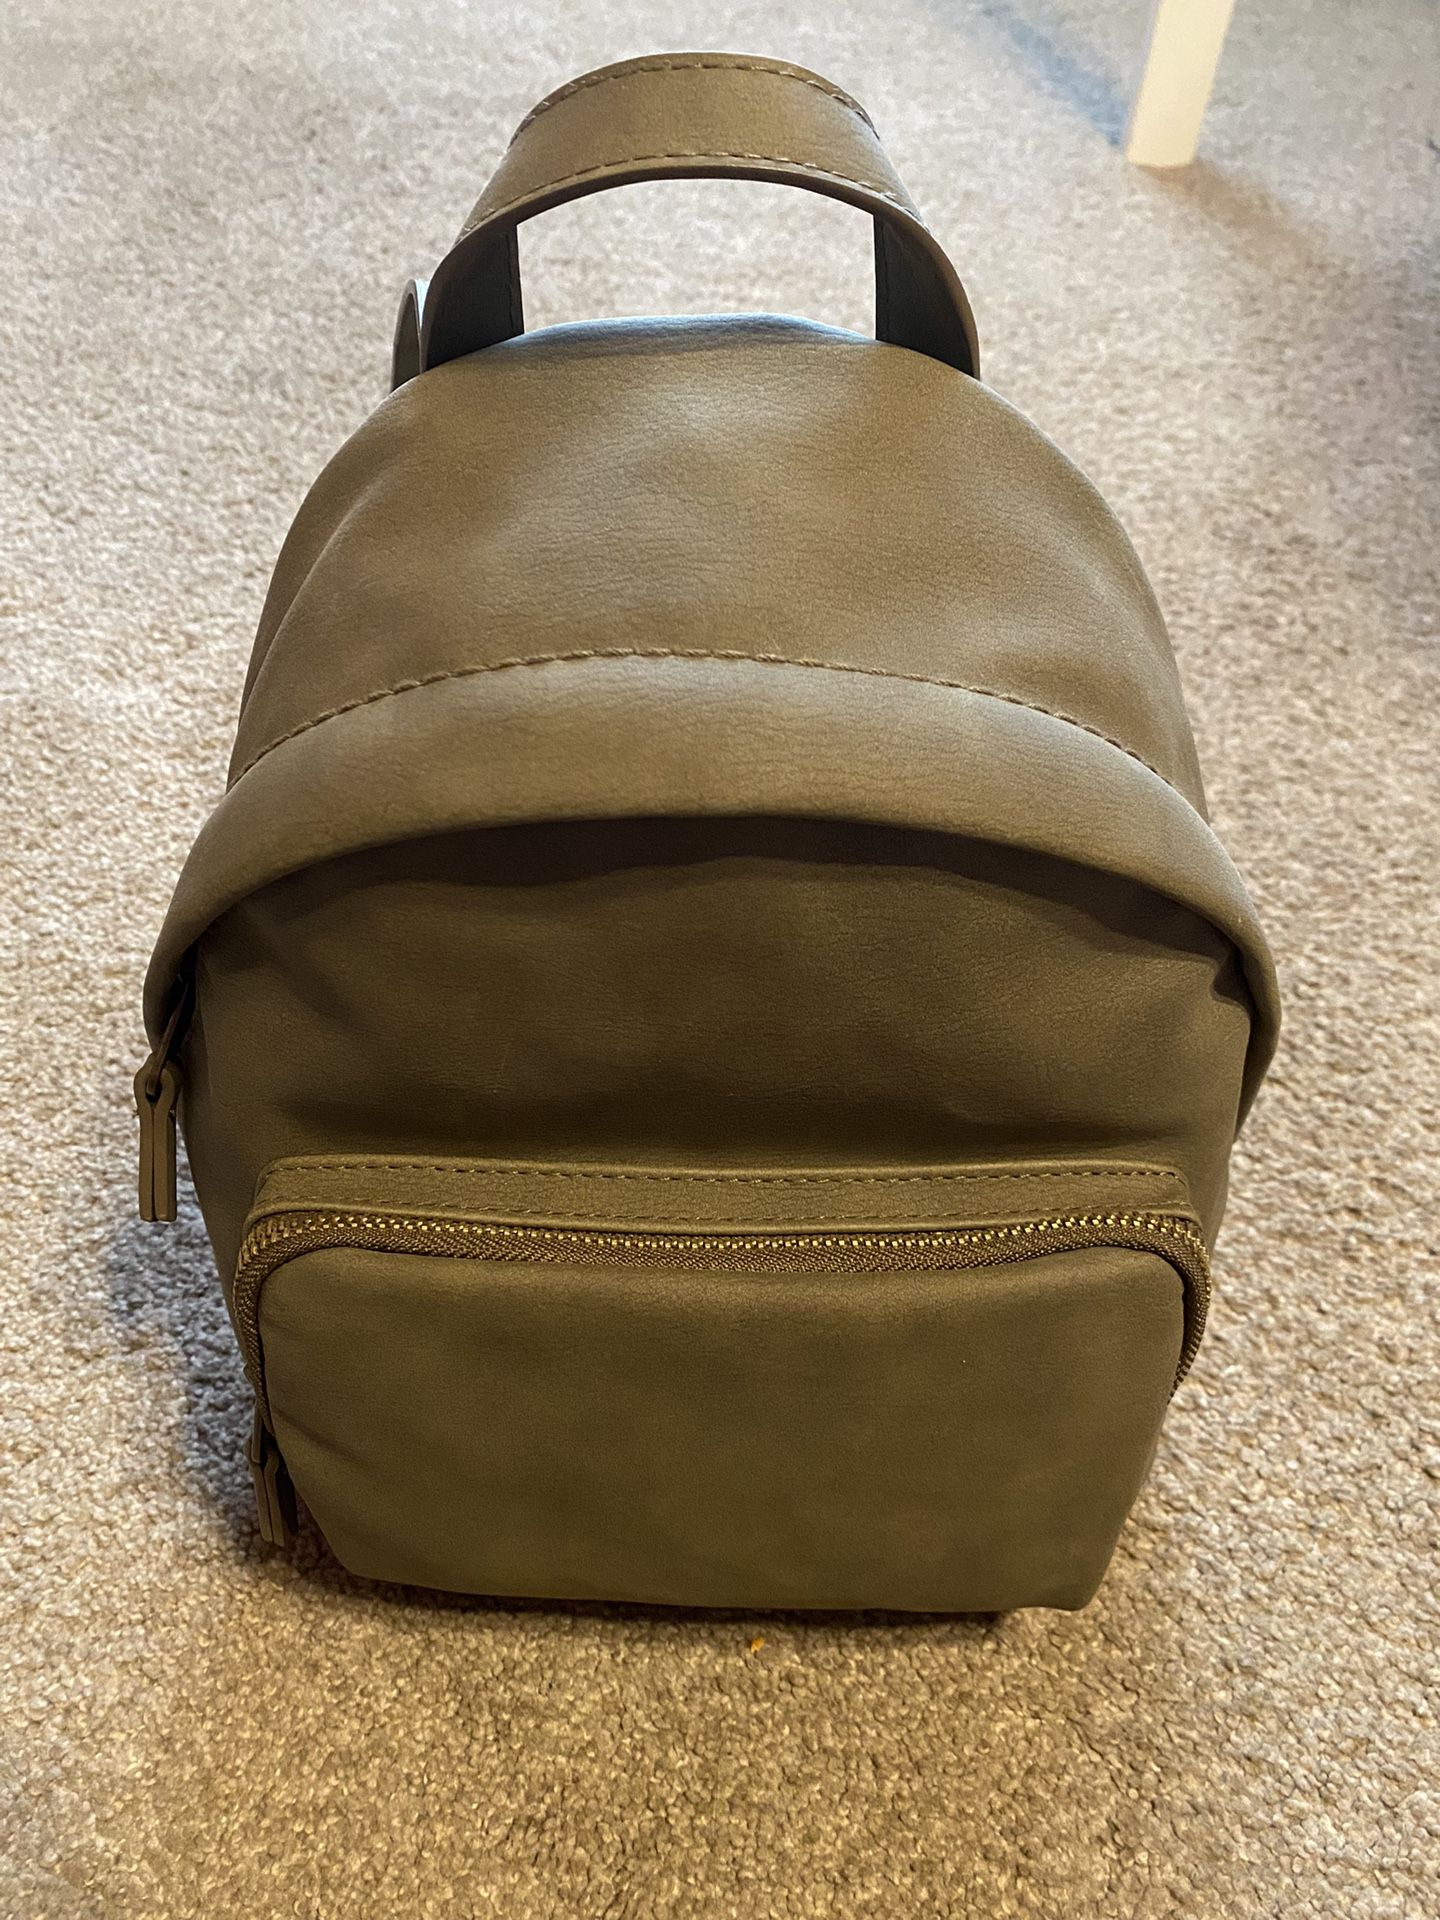 Olive Green Mini Backpack Universal Threads